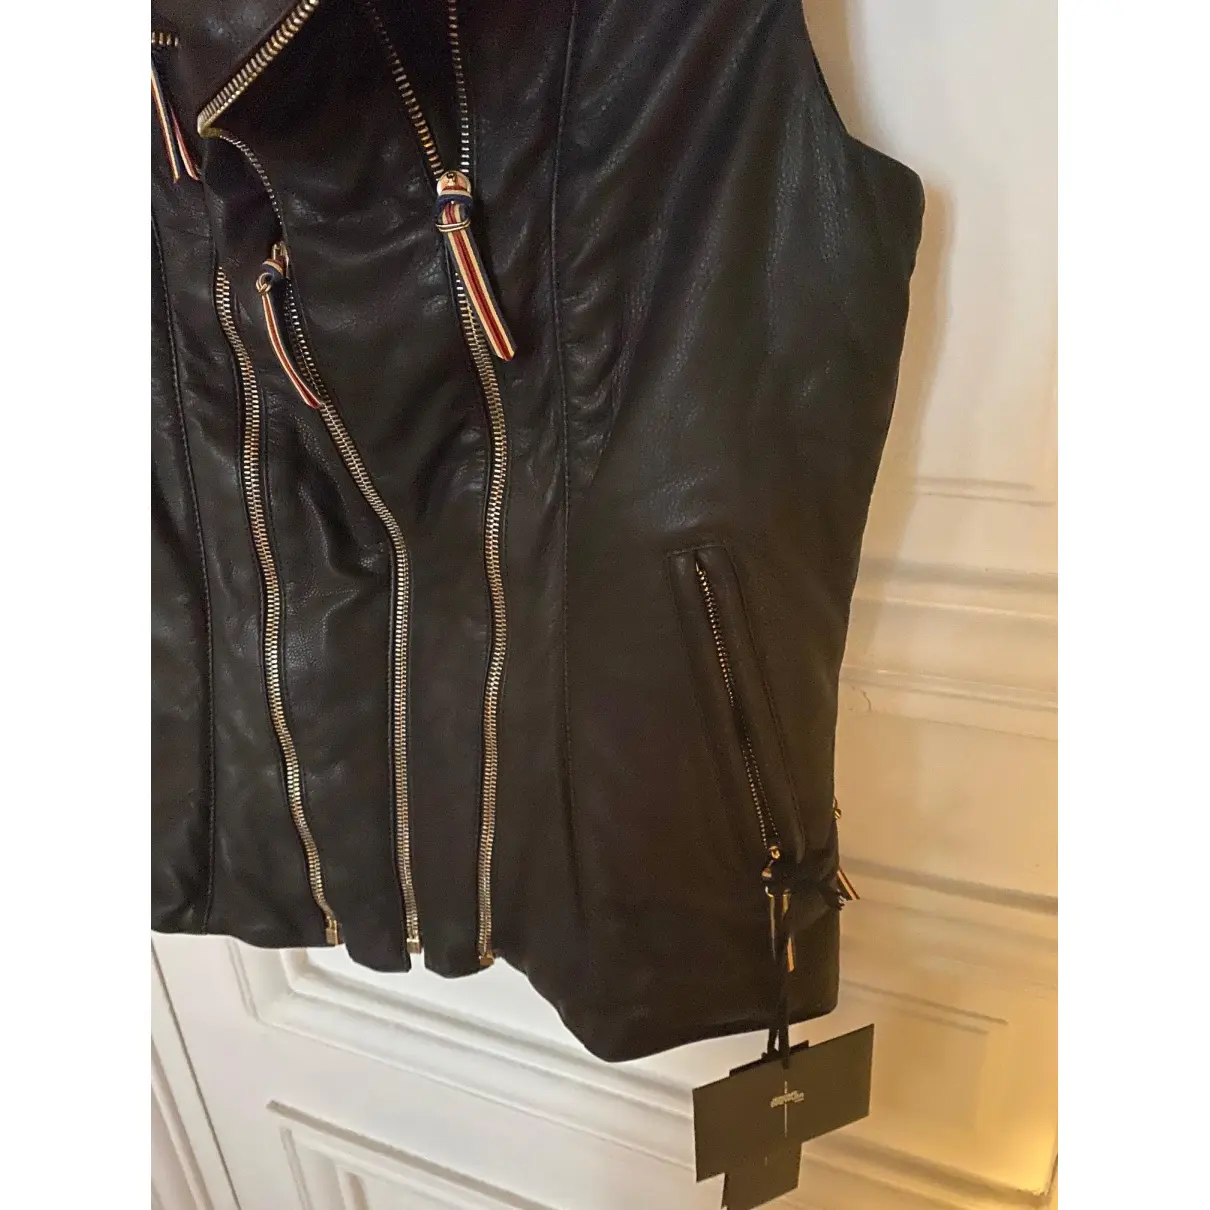 Buy Jerome Dreyfuss Leather jacket online